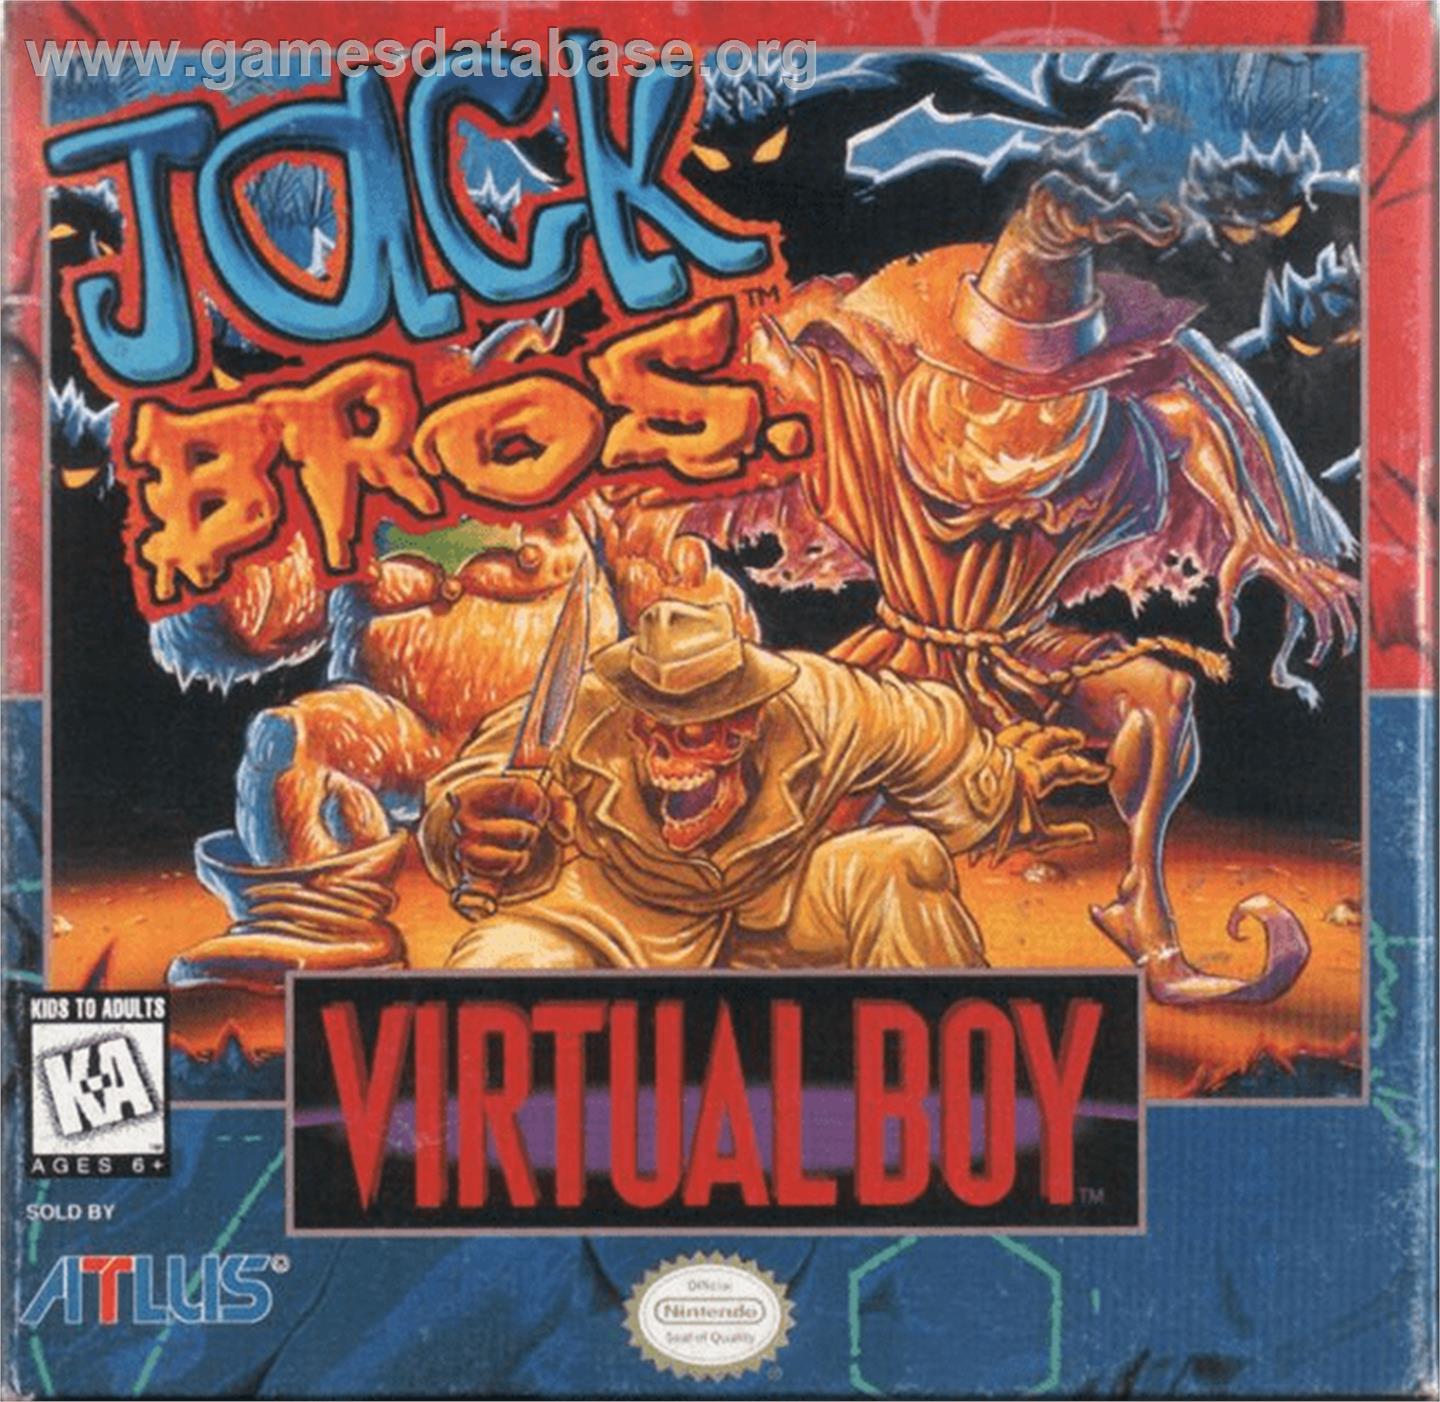 Jack Bros. - Nintendo Virtual Boy - Artwork - Box